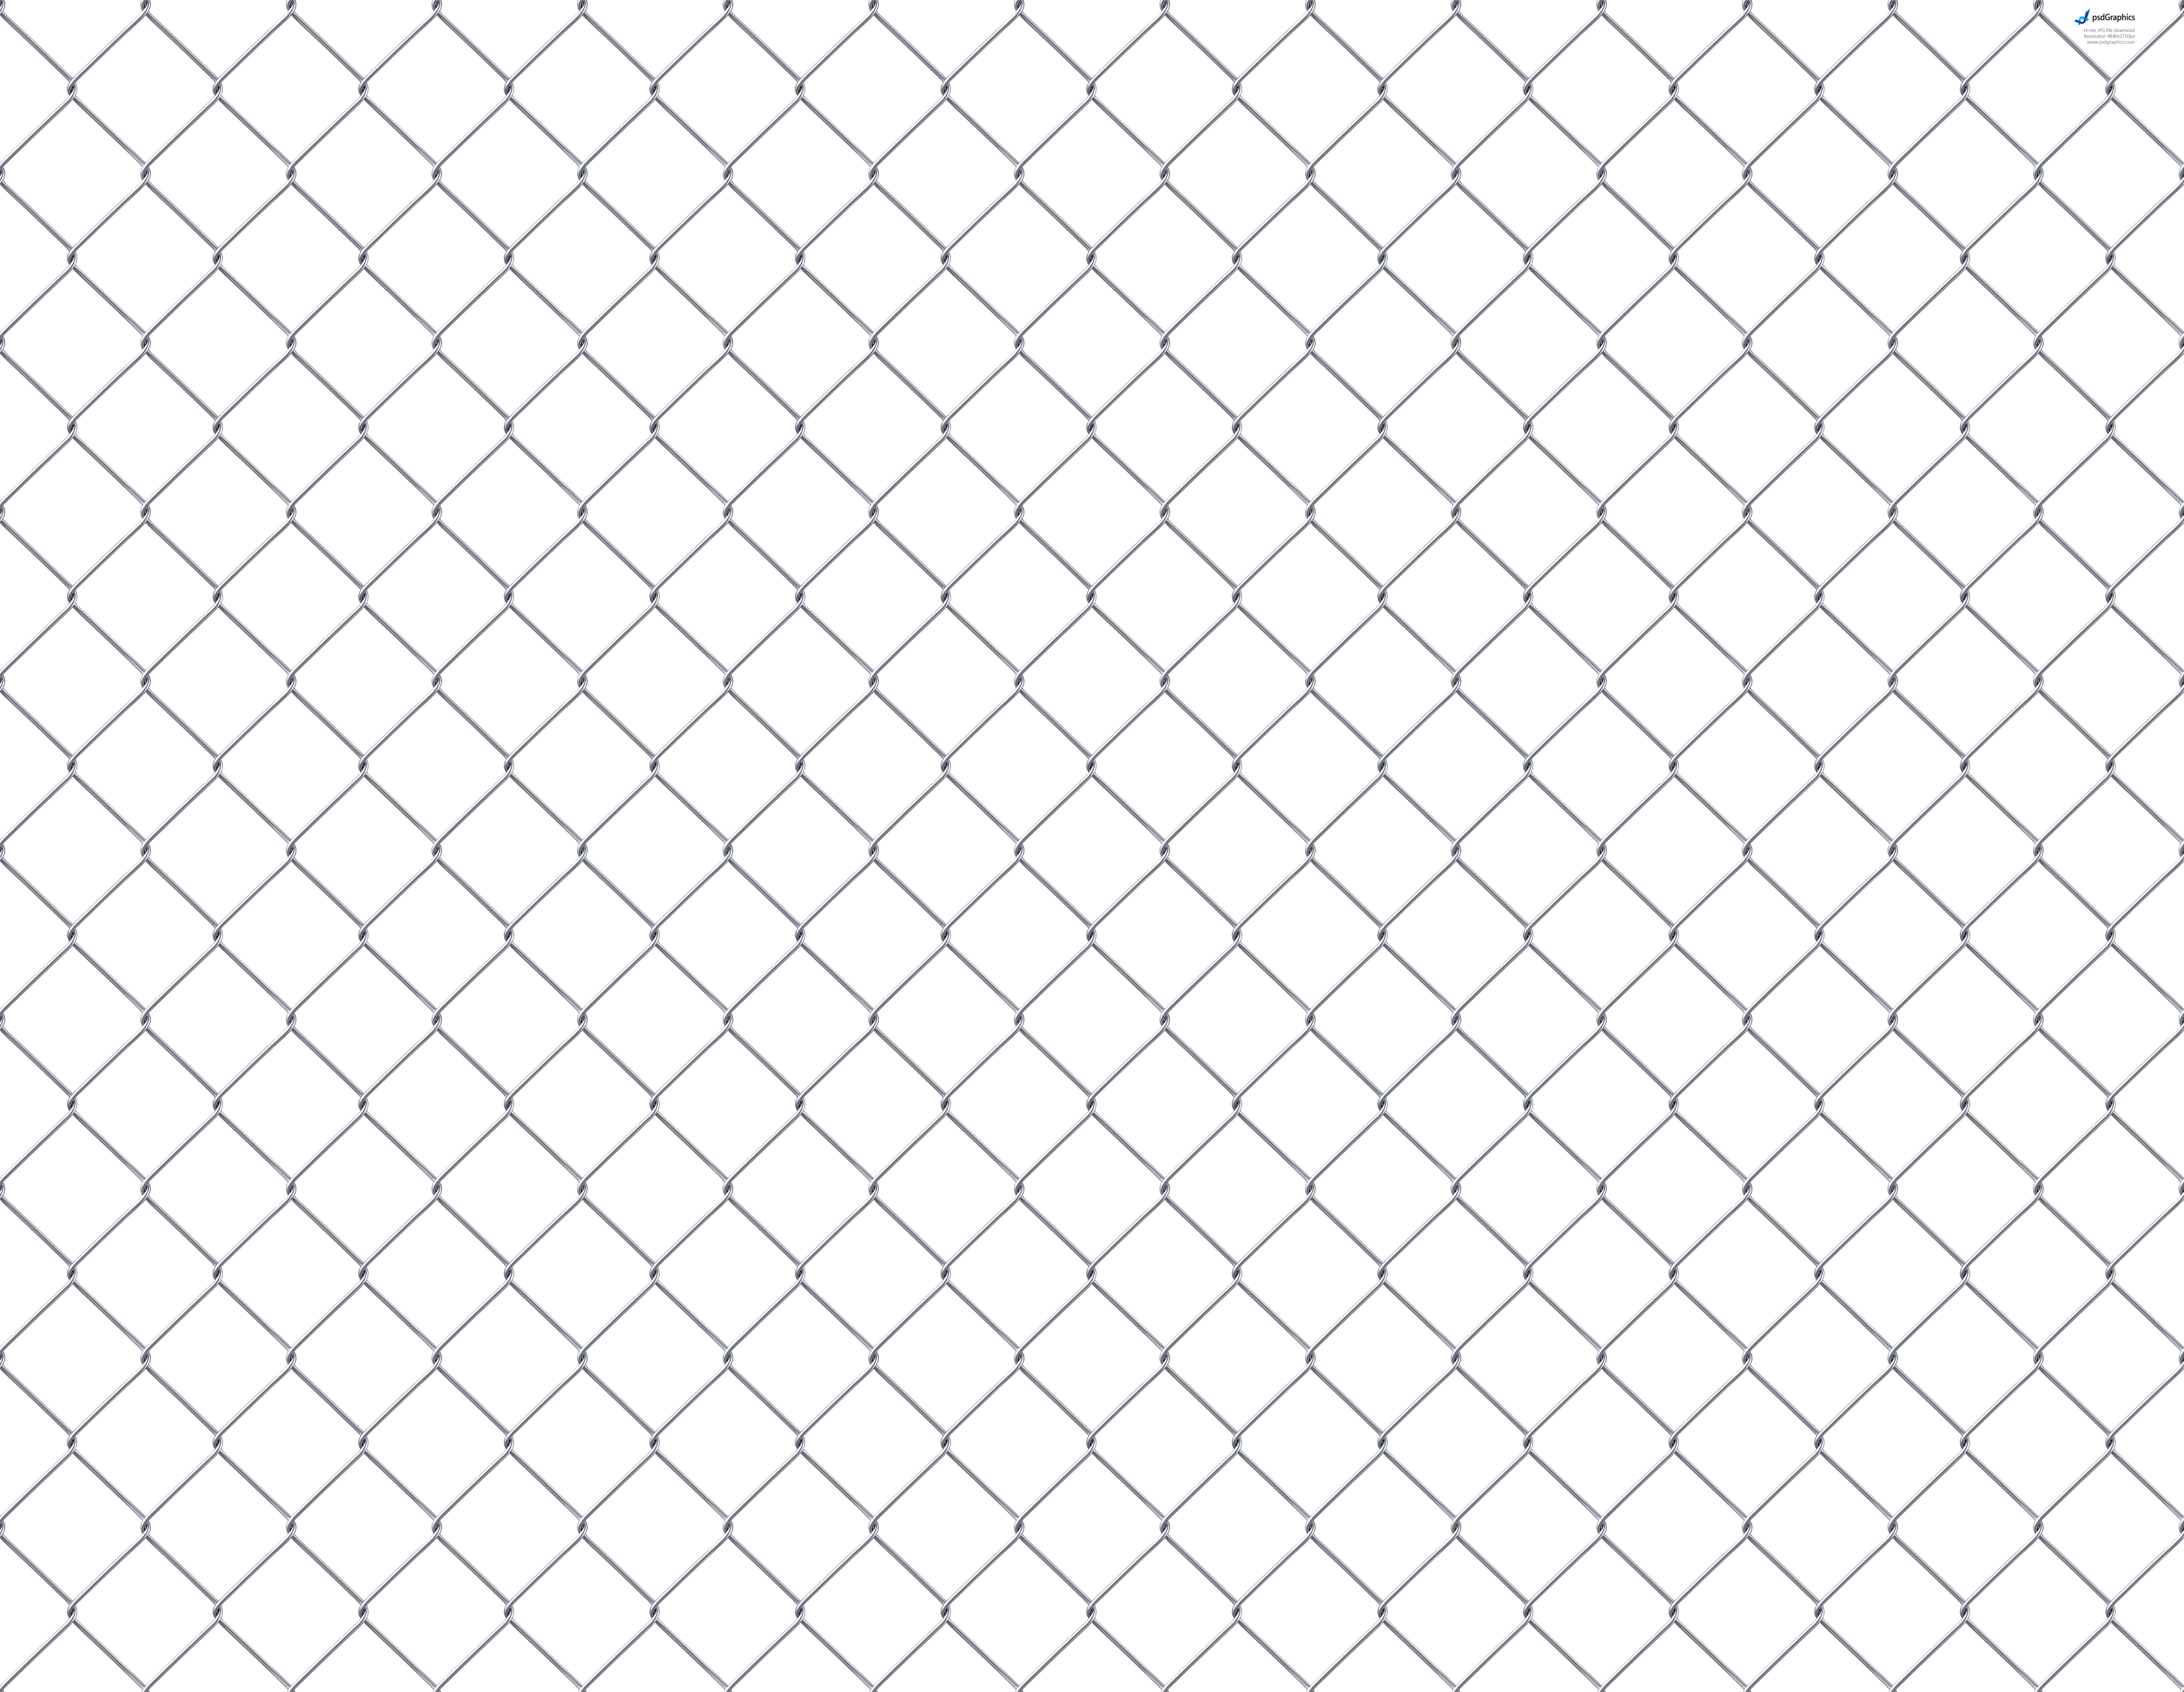 Chainlink fence texture | PSDGraphics